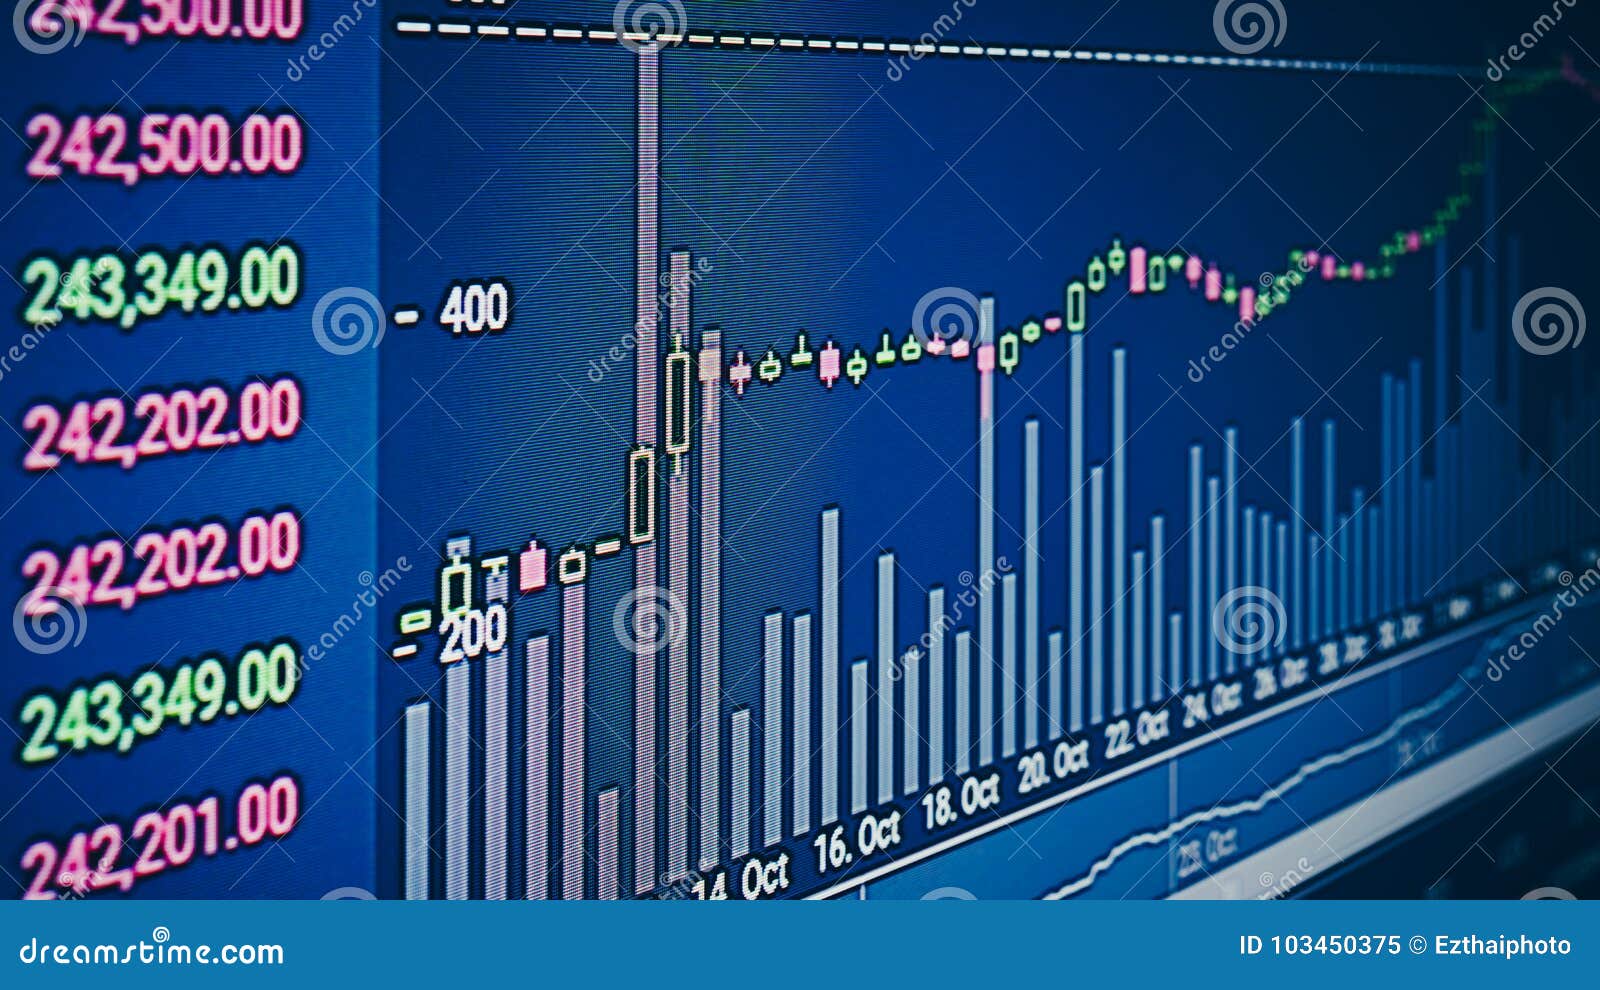 Btc Stock Chart